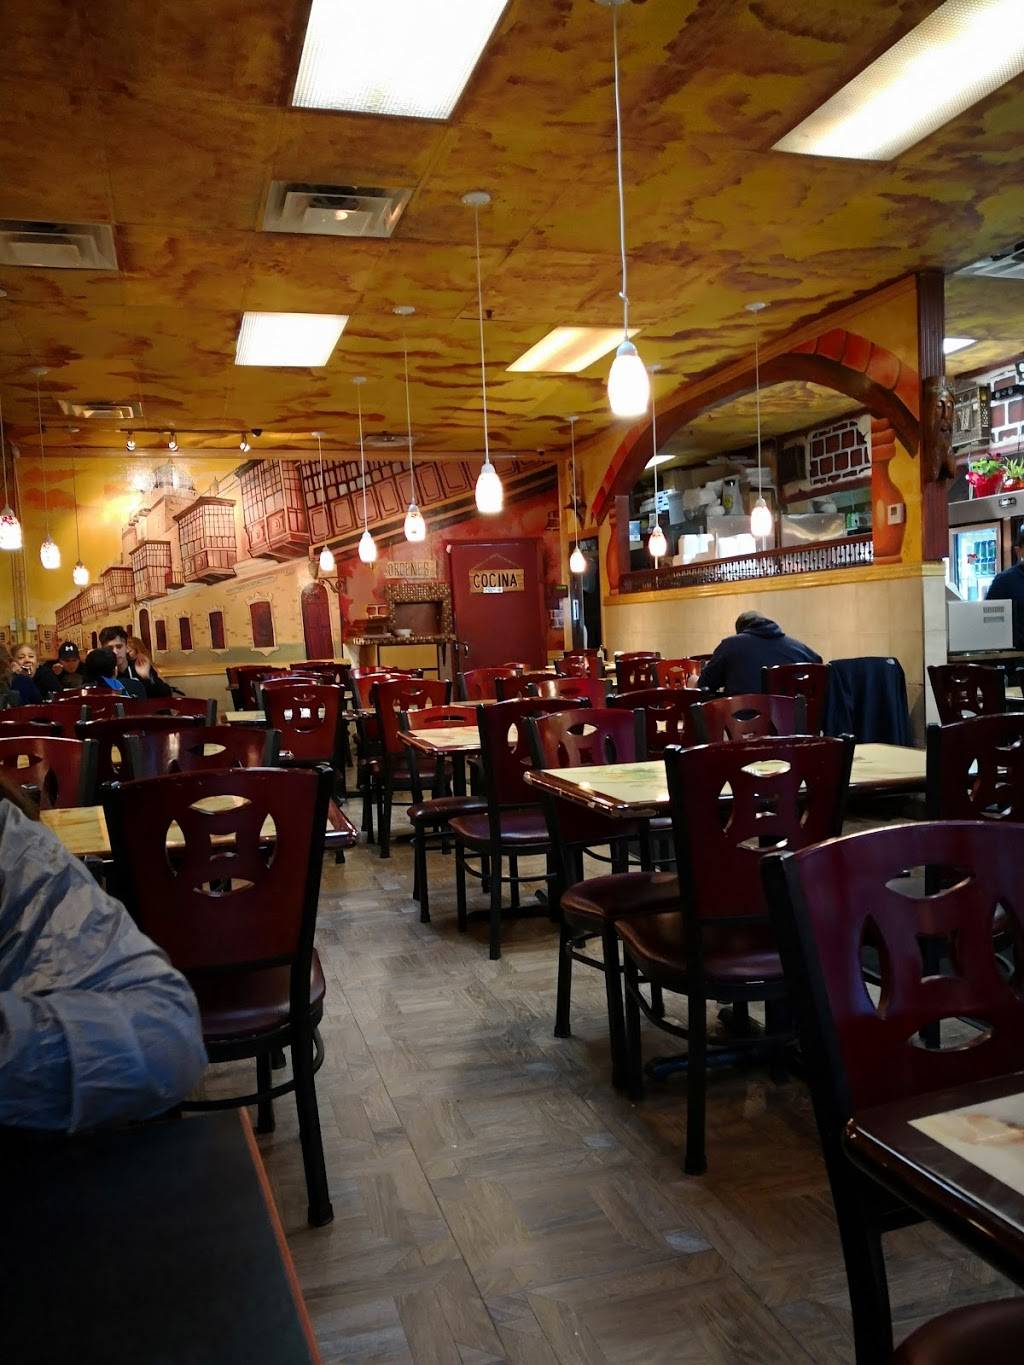 Anticucheria Parrilladas Dany | restaurant | 112 48th St, Union City, NJ 07087, USA | 2012230995 OR +1 201-223-0995